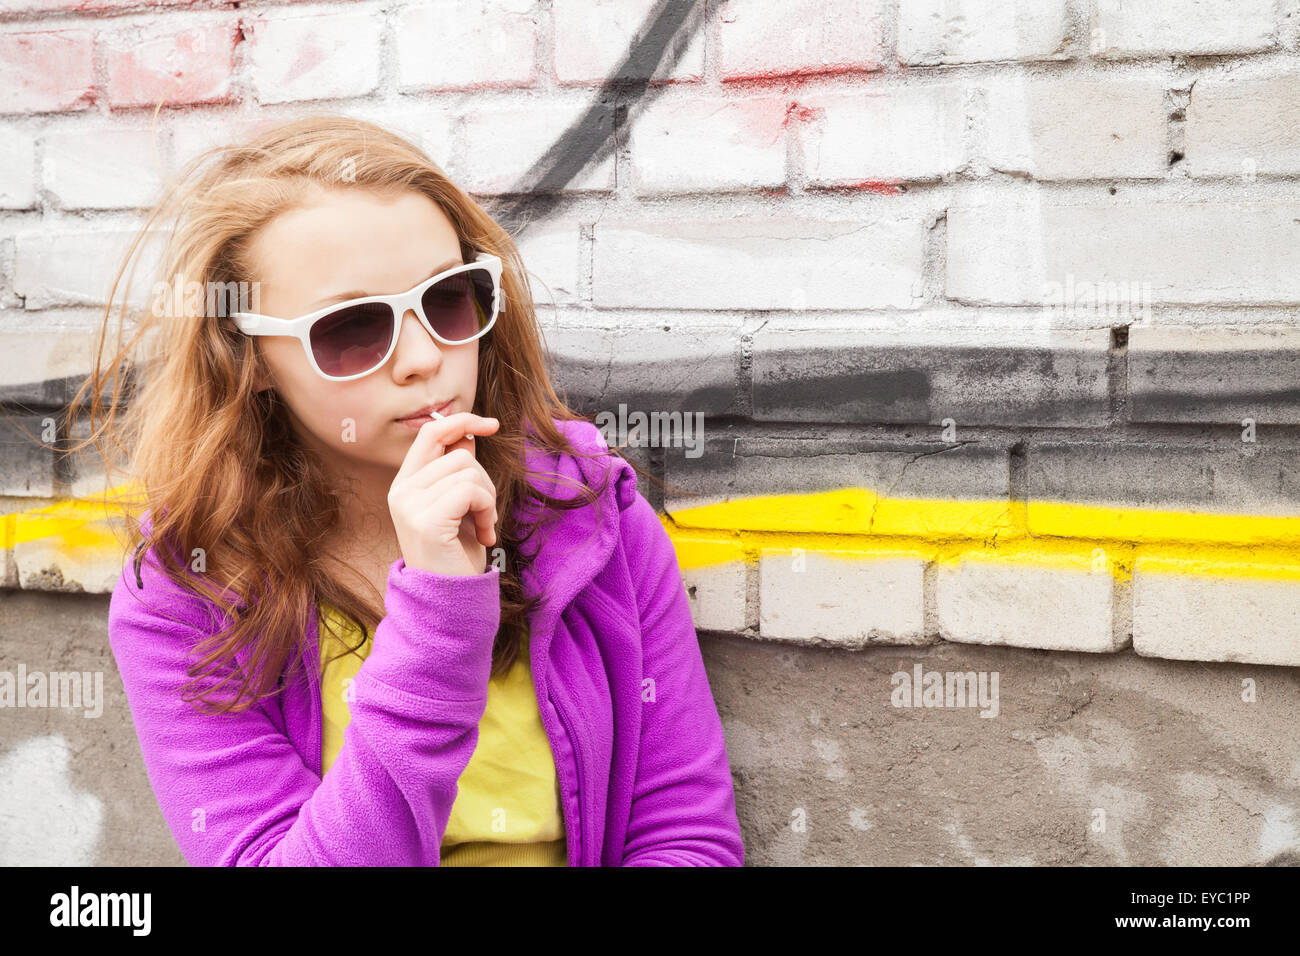 Rubia adolescente con lollipop, retrato urbano vertical exterior Foto de stock